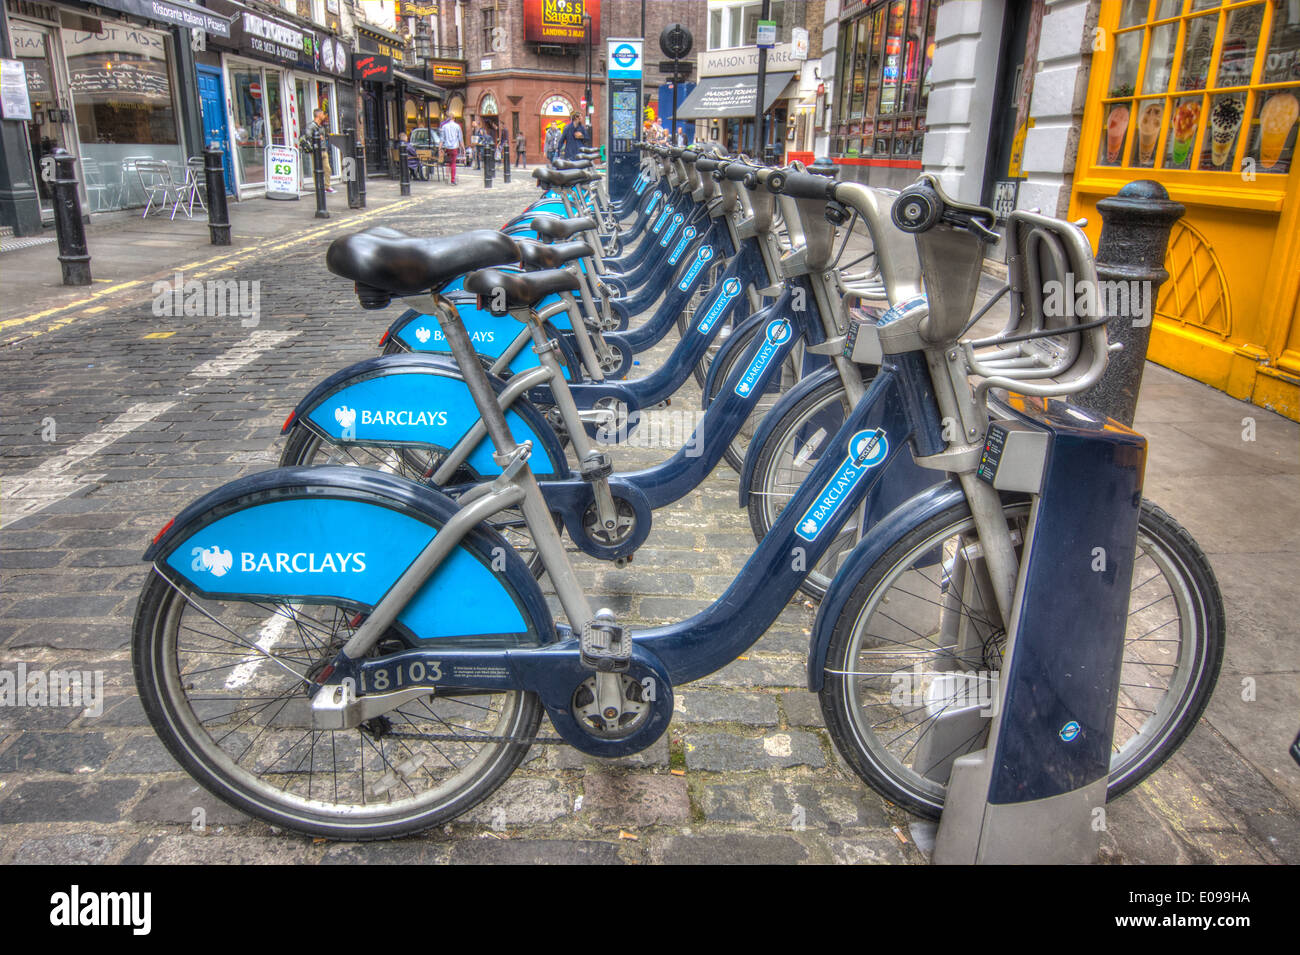 barclays hire bike scheme, London Stock Photo